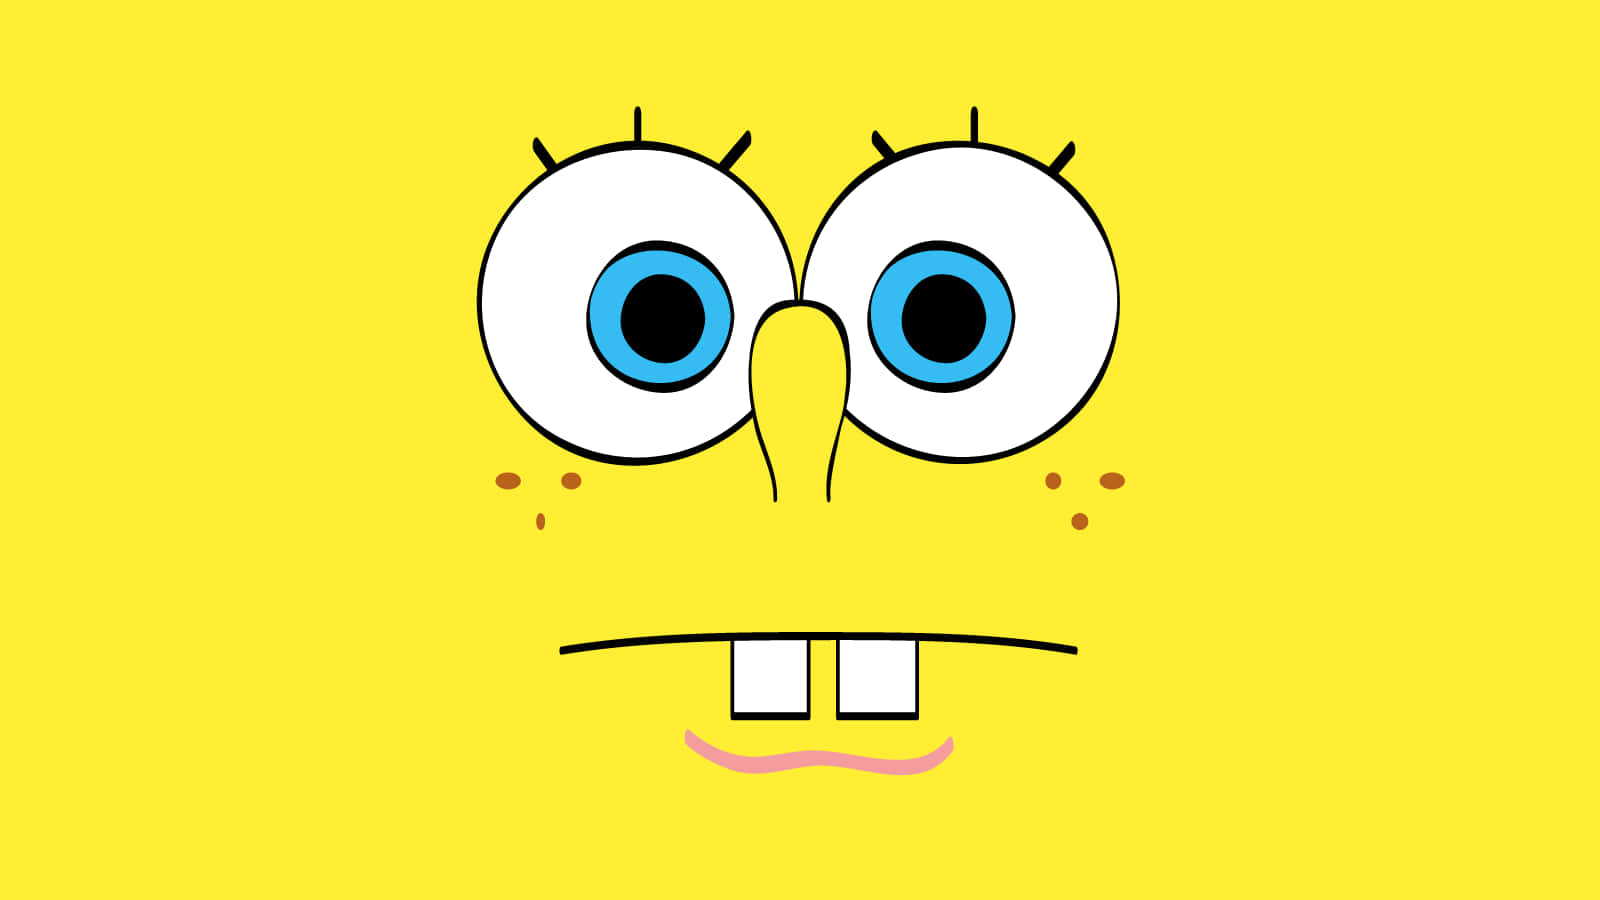 Spongebob Squarepants Face With Blue Eyes On Yellow Background